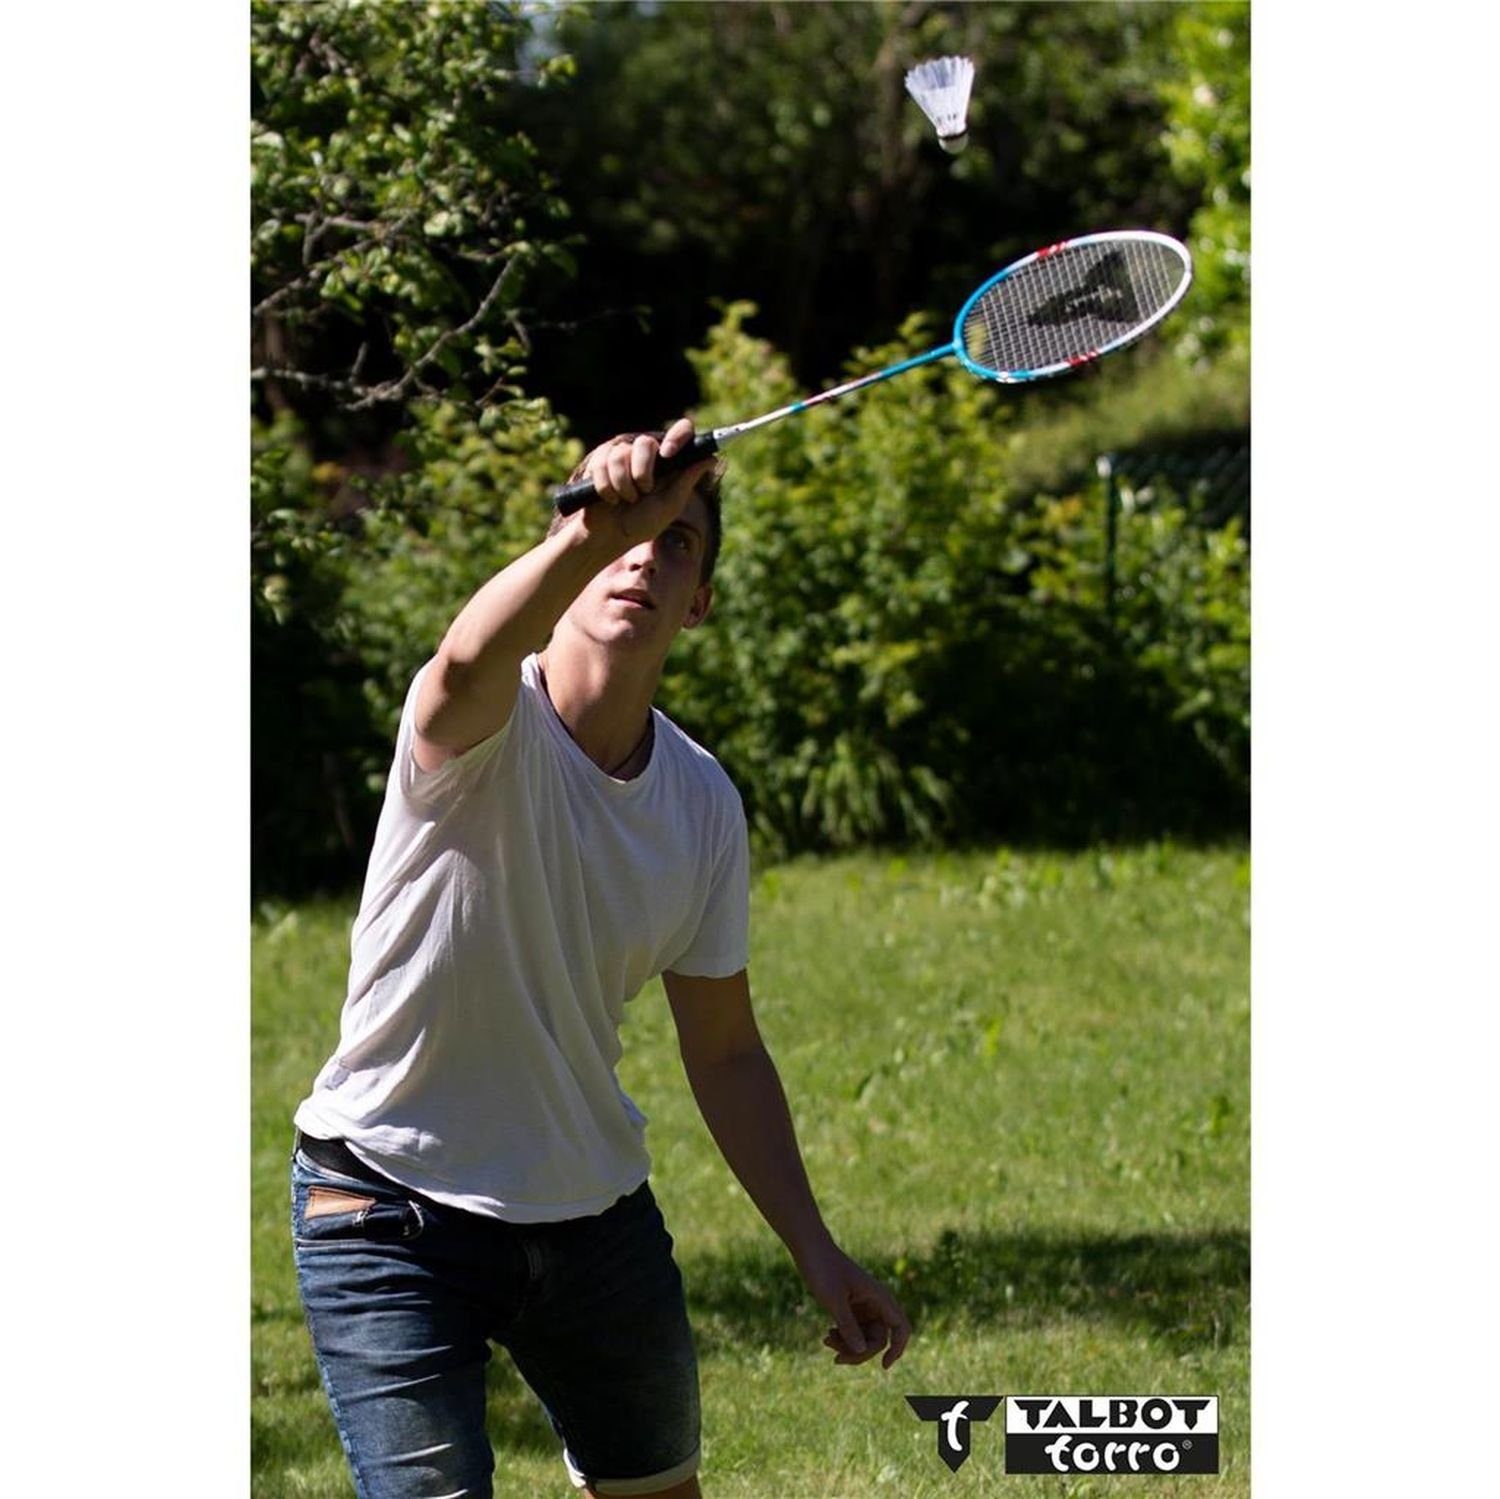 Badmintonschläger 4-Fighter Set Talbot-Torro Badminton Premium